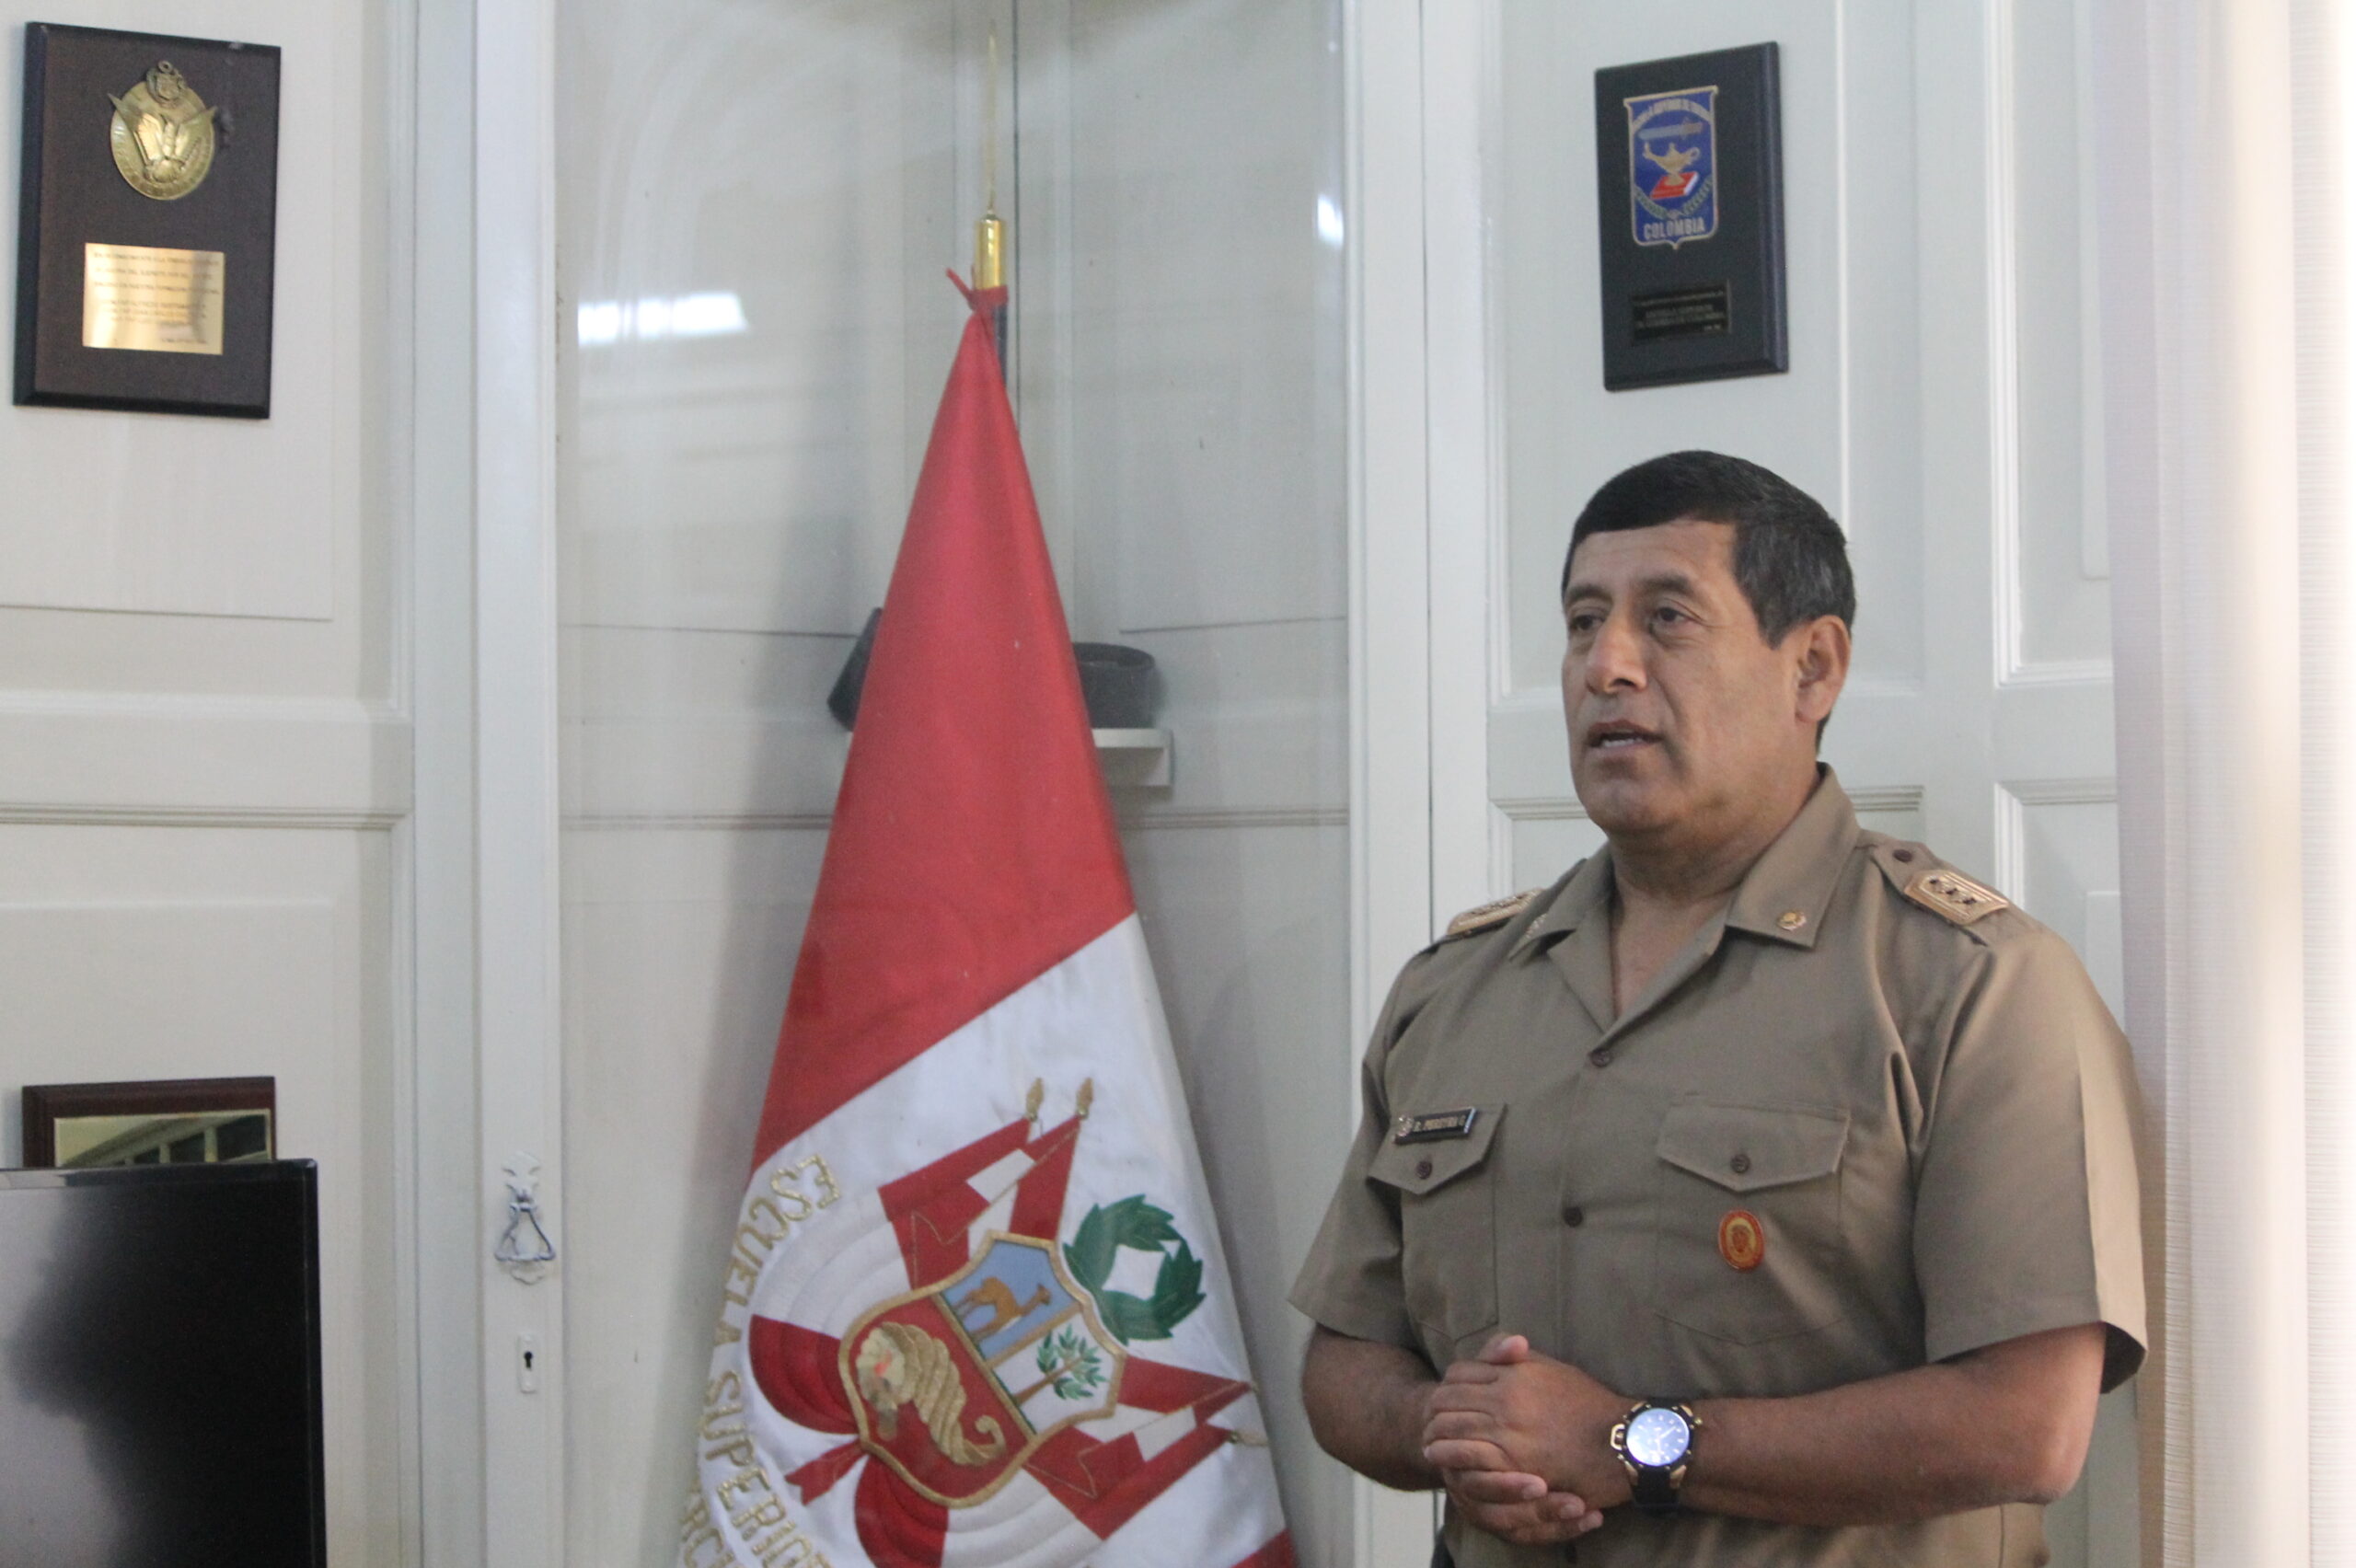 Peruvian War College Trains Future Military Leaders